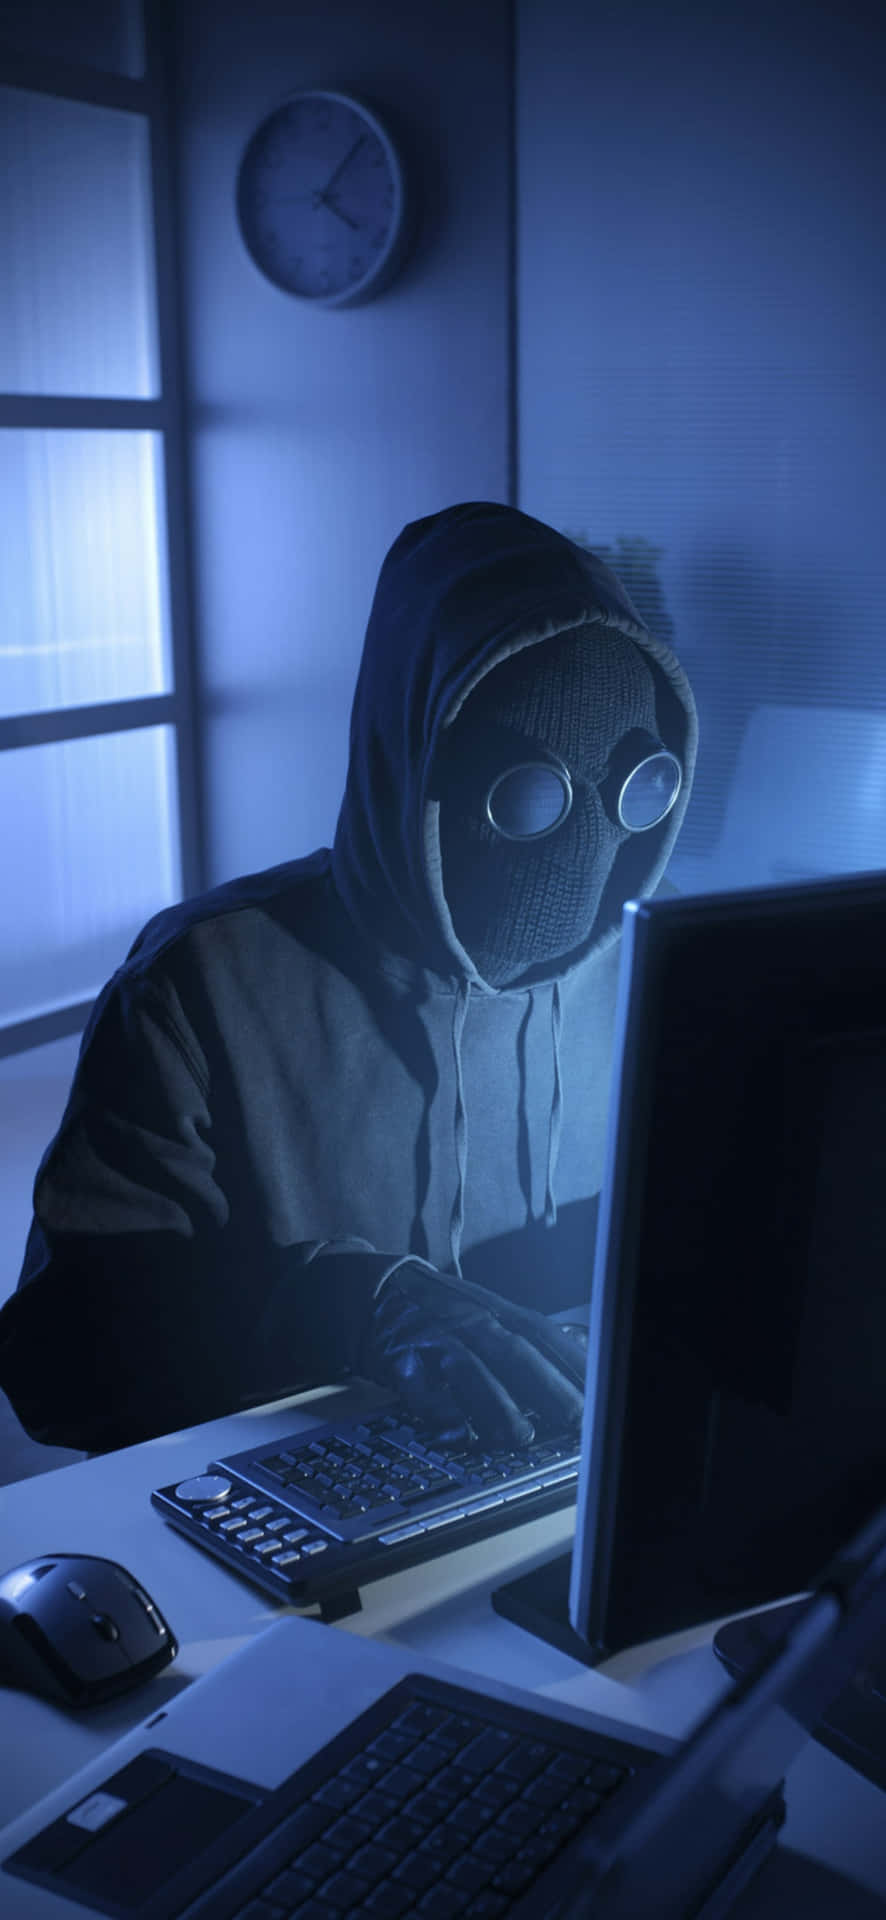 Hackerin Dark Roomwith Computer.jpg